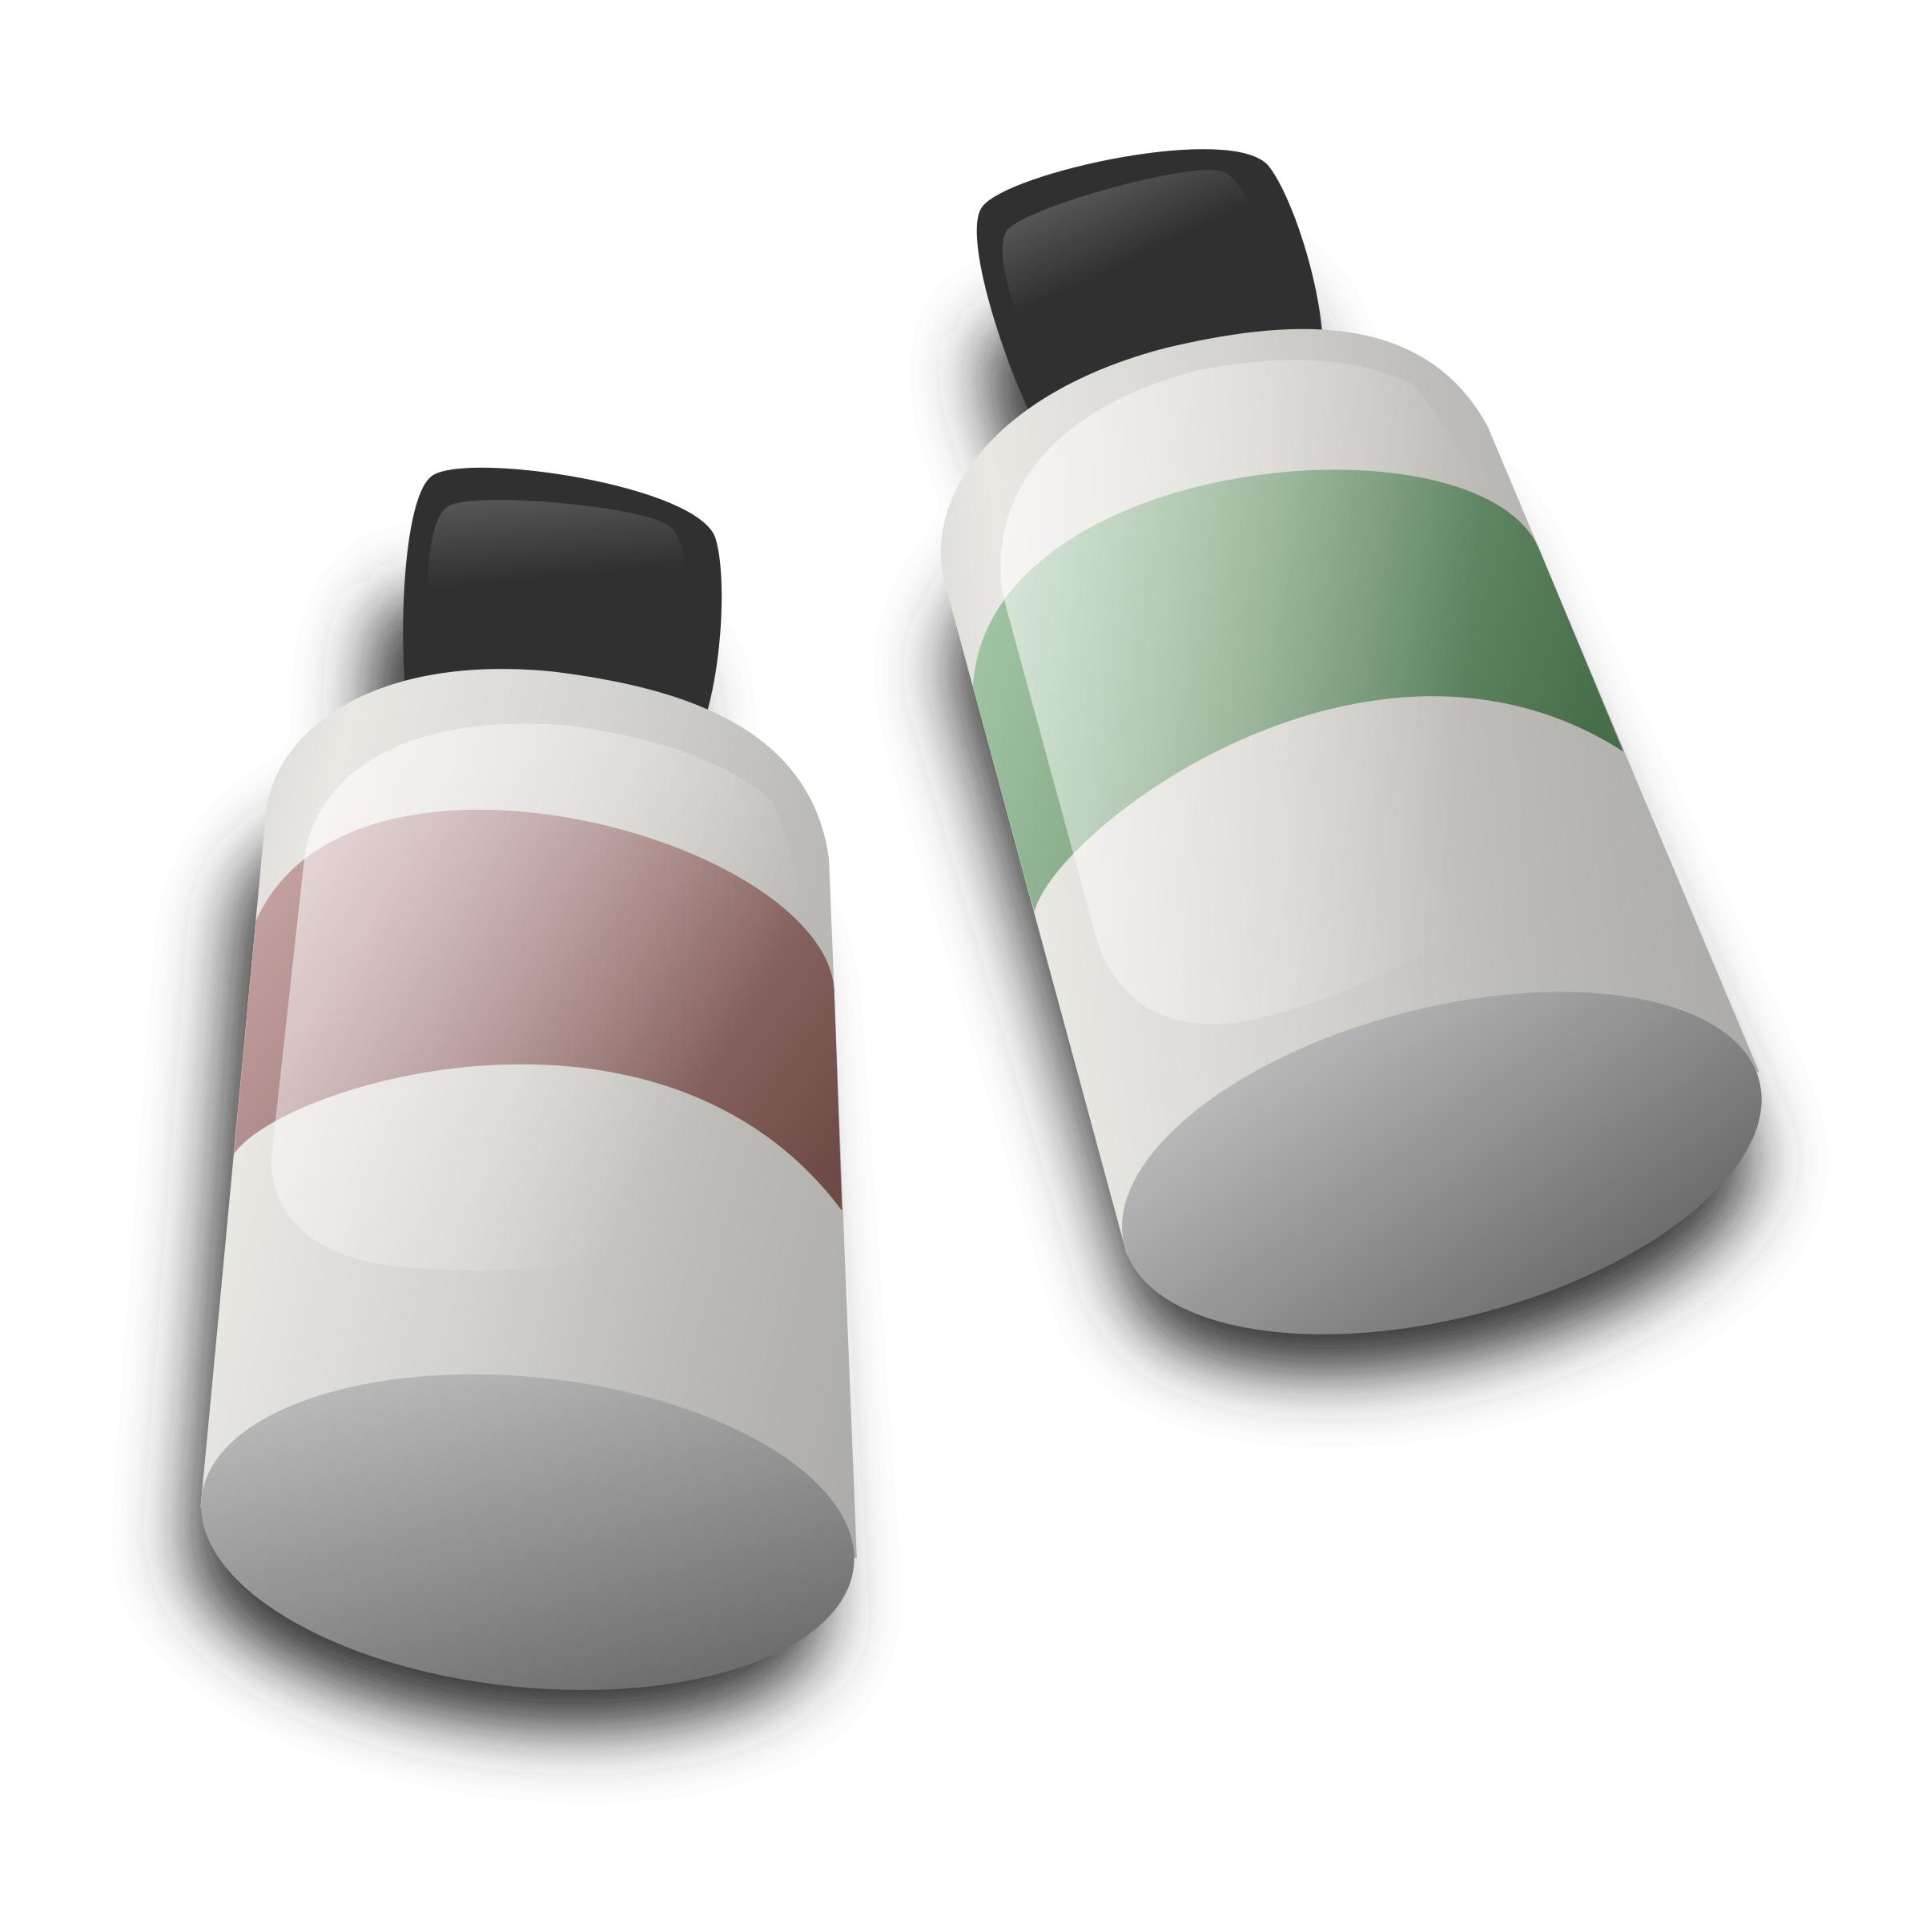 Bottles of dye ink icons